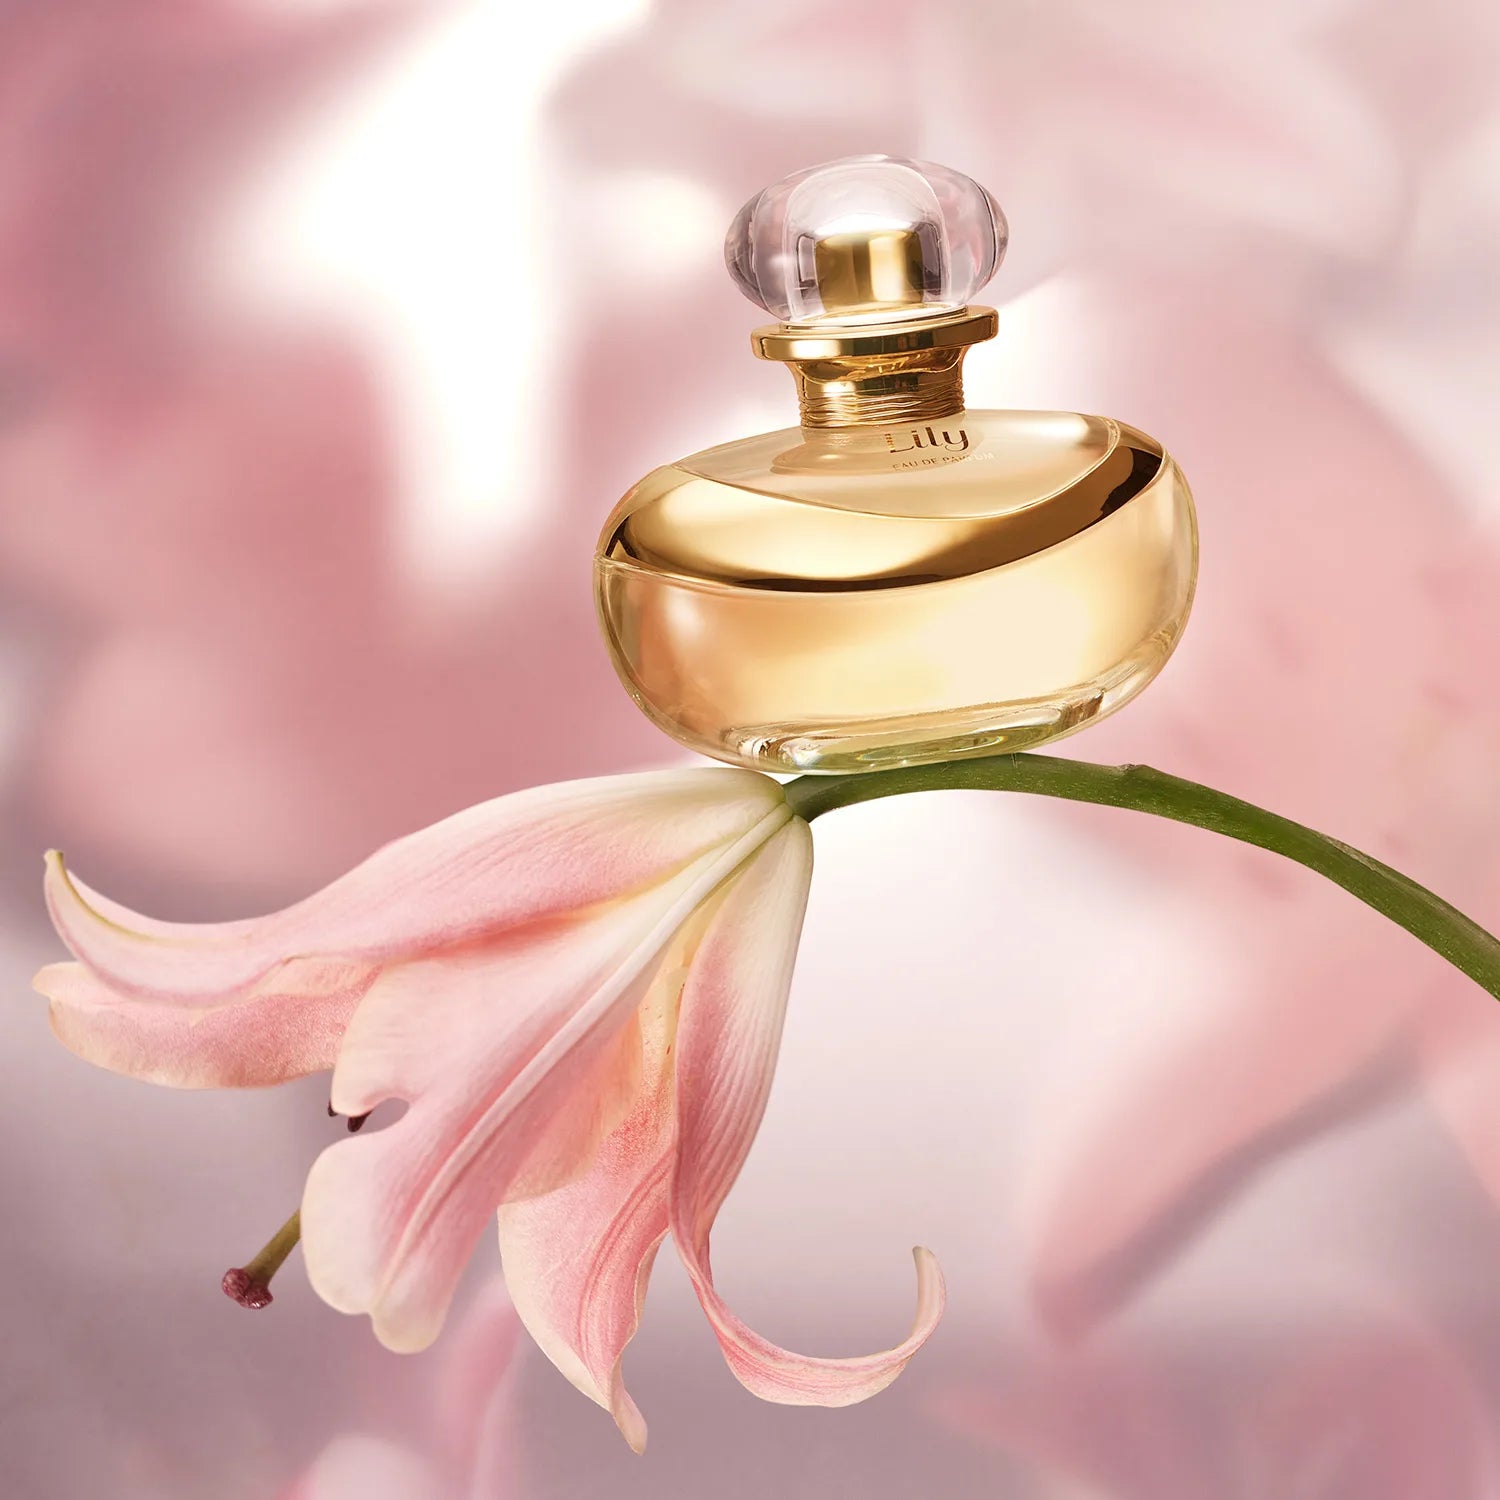 O Boticario Lily Perfume 75 ml